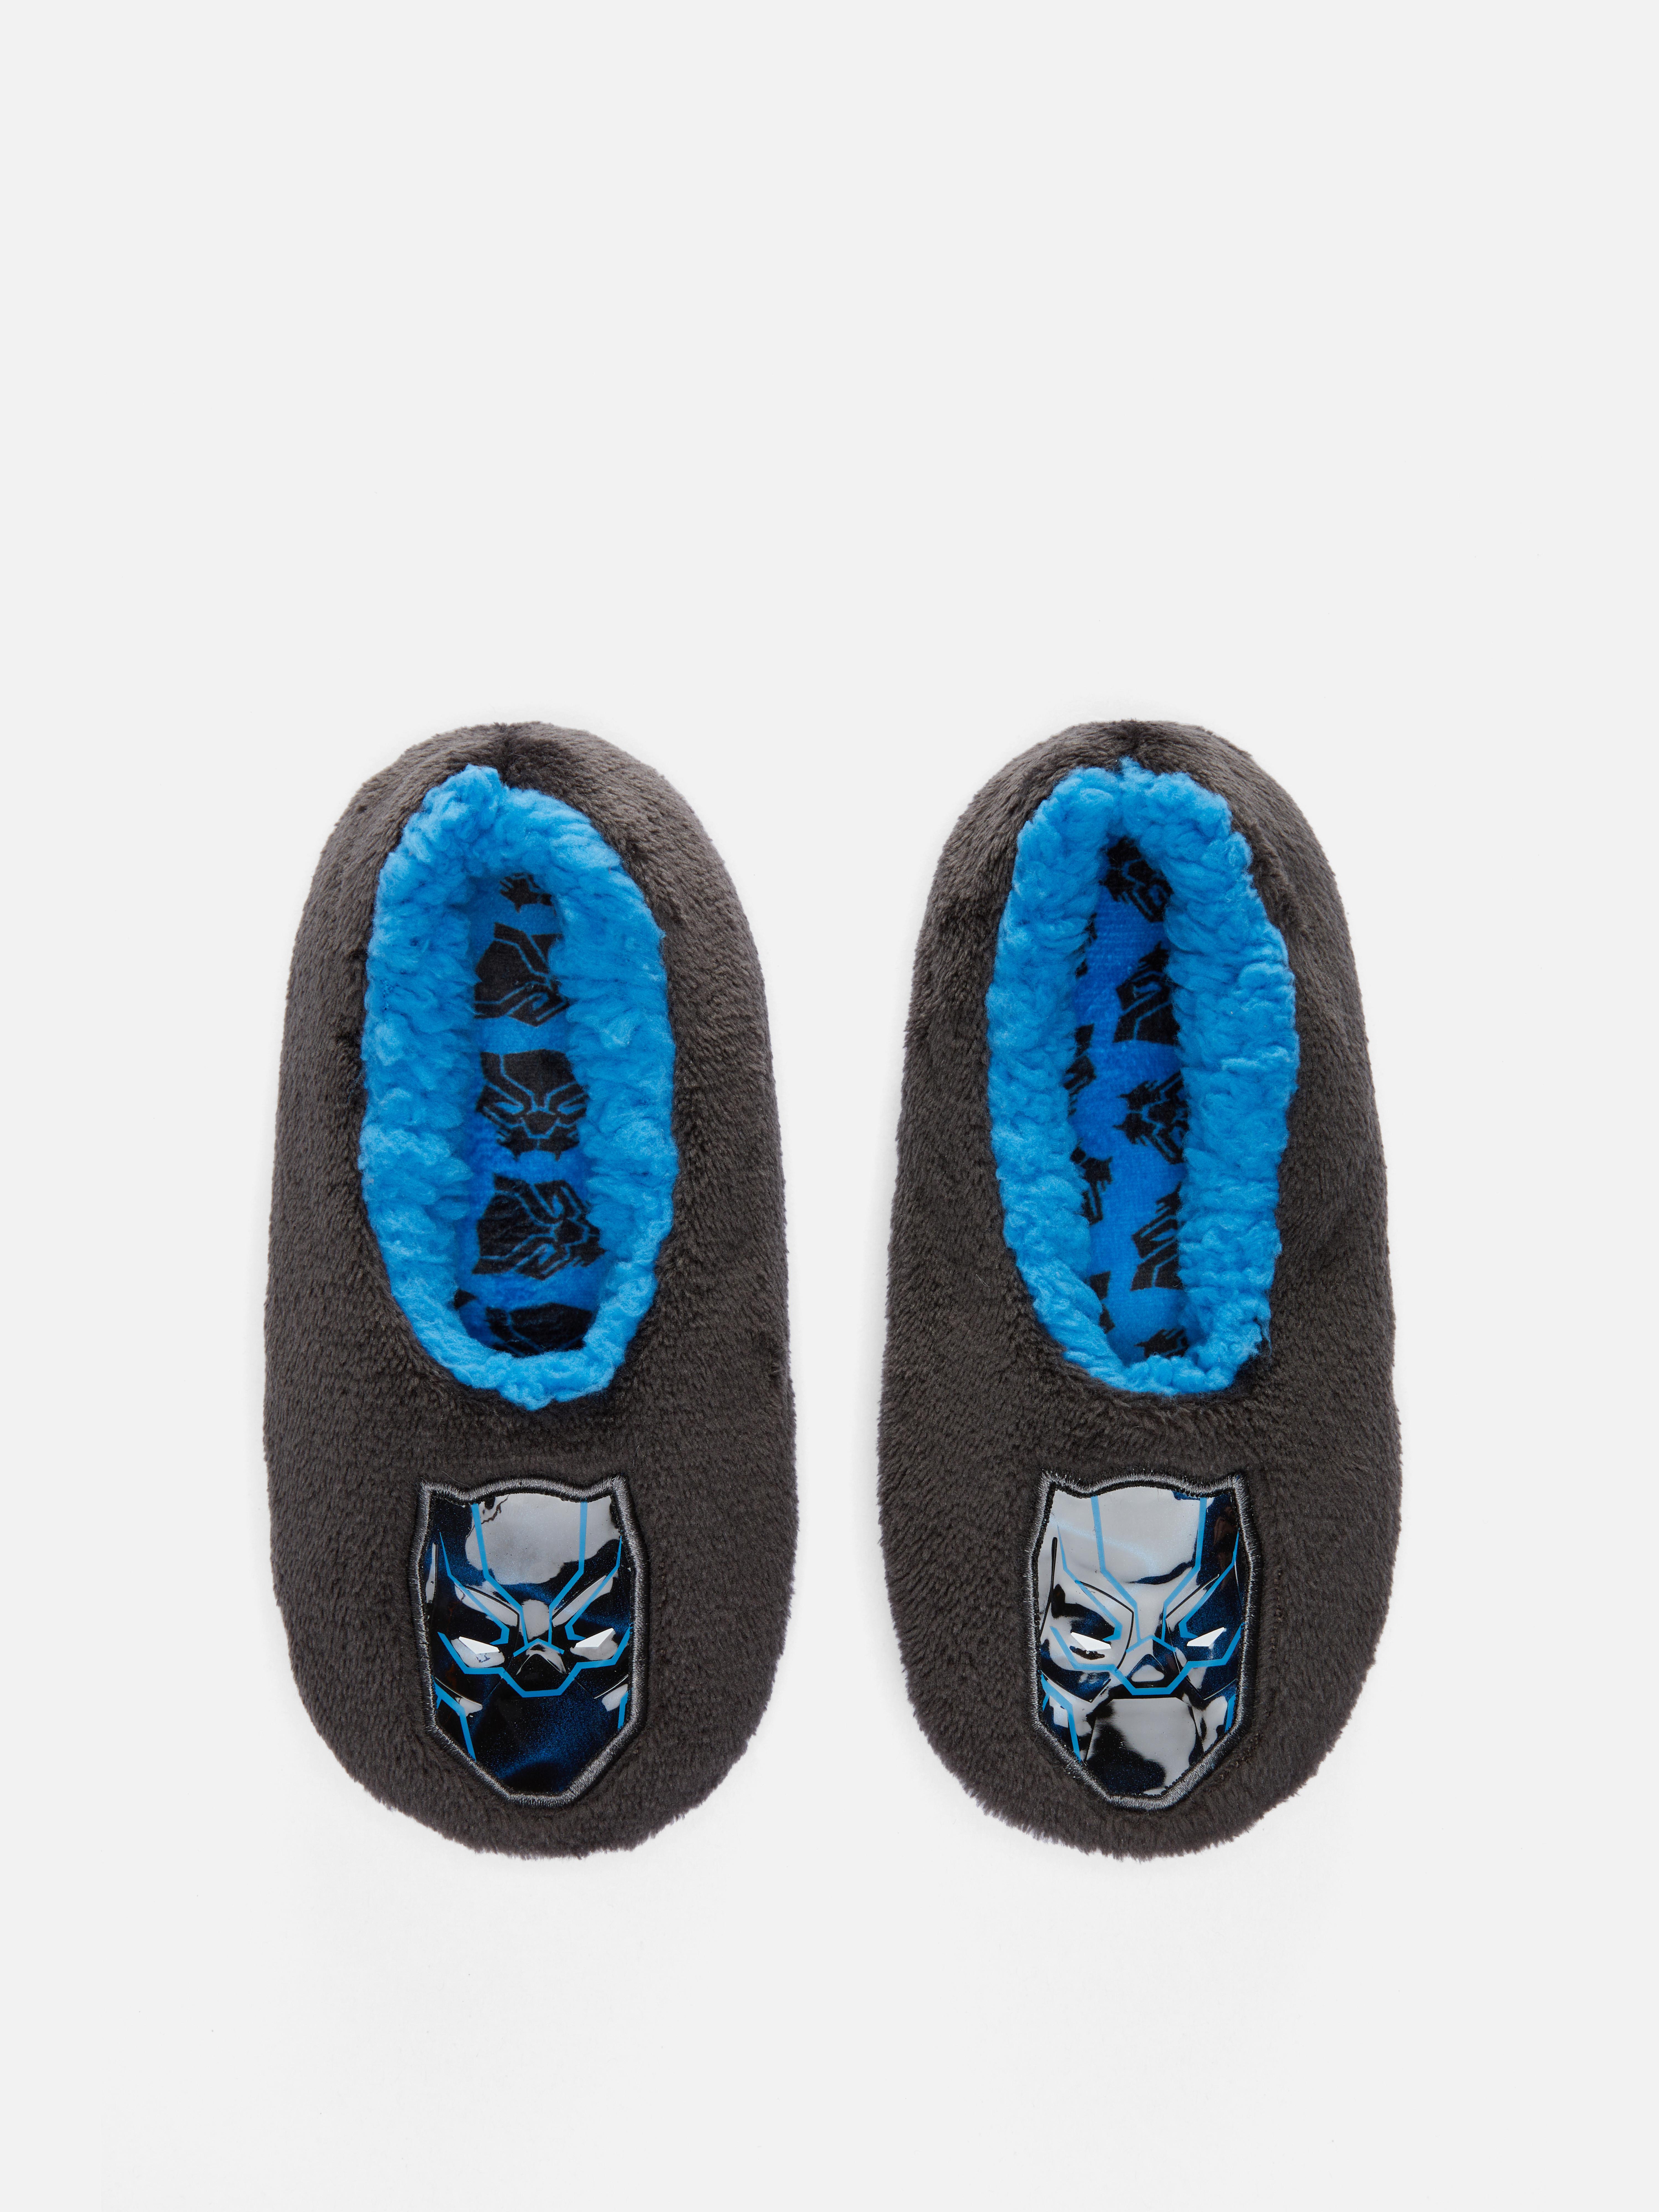 Marvel Black Panther Footsie Slippers